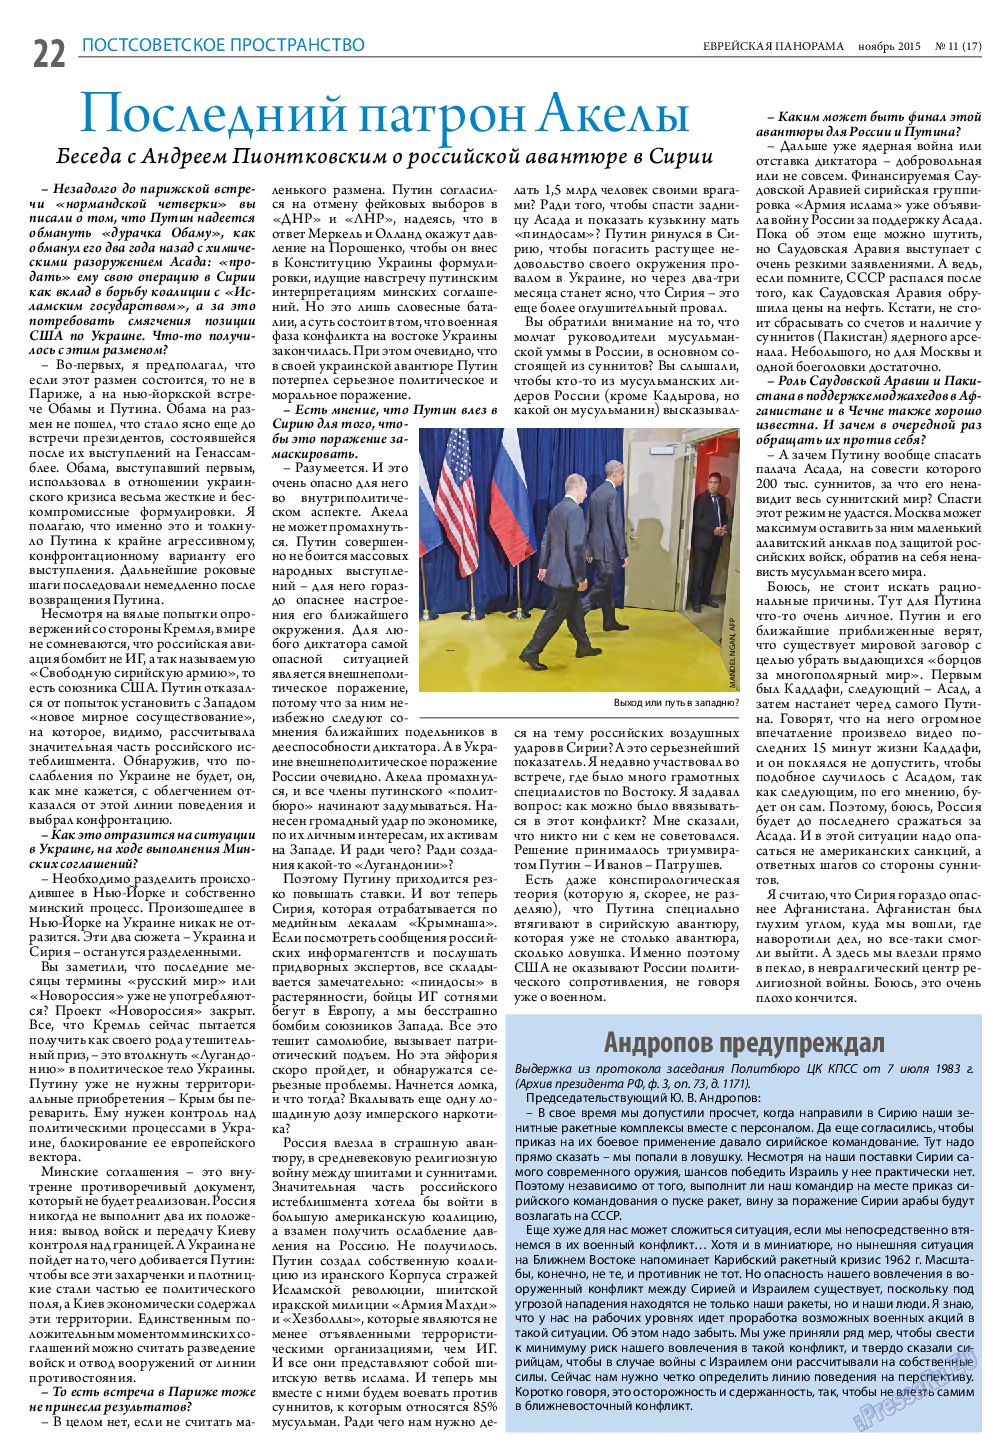 Еврейская панорама, газета. 2015 №11 стр.22